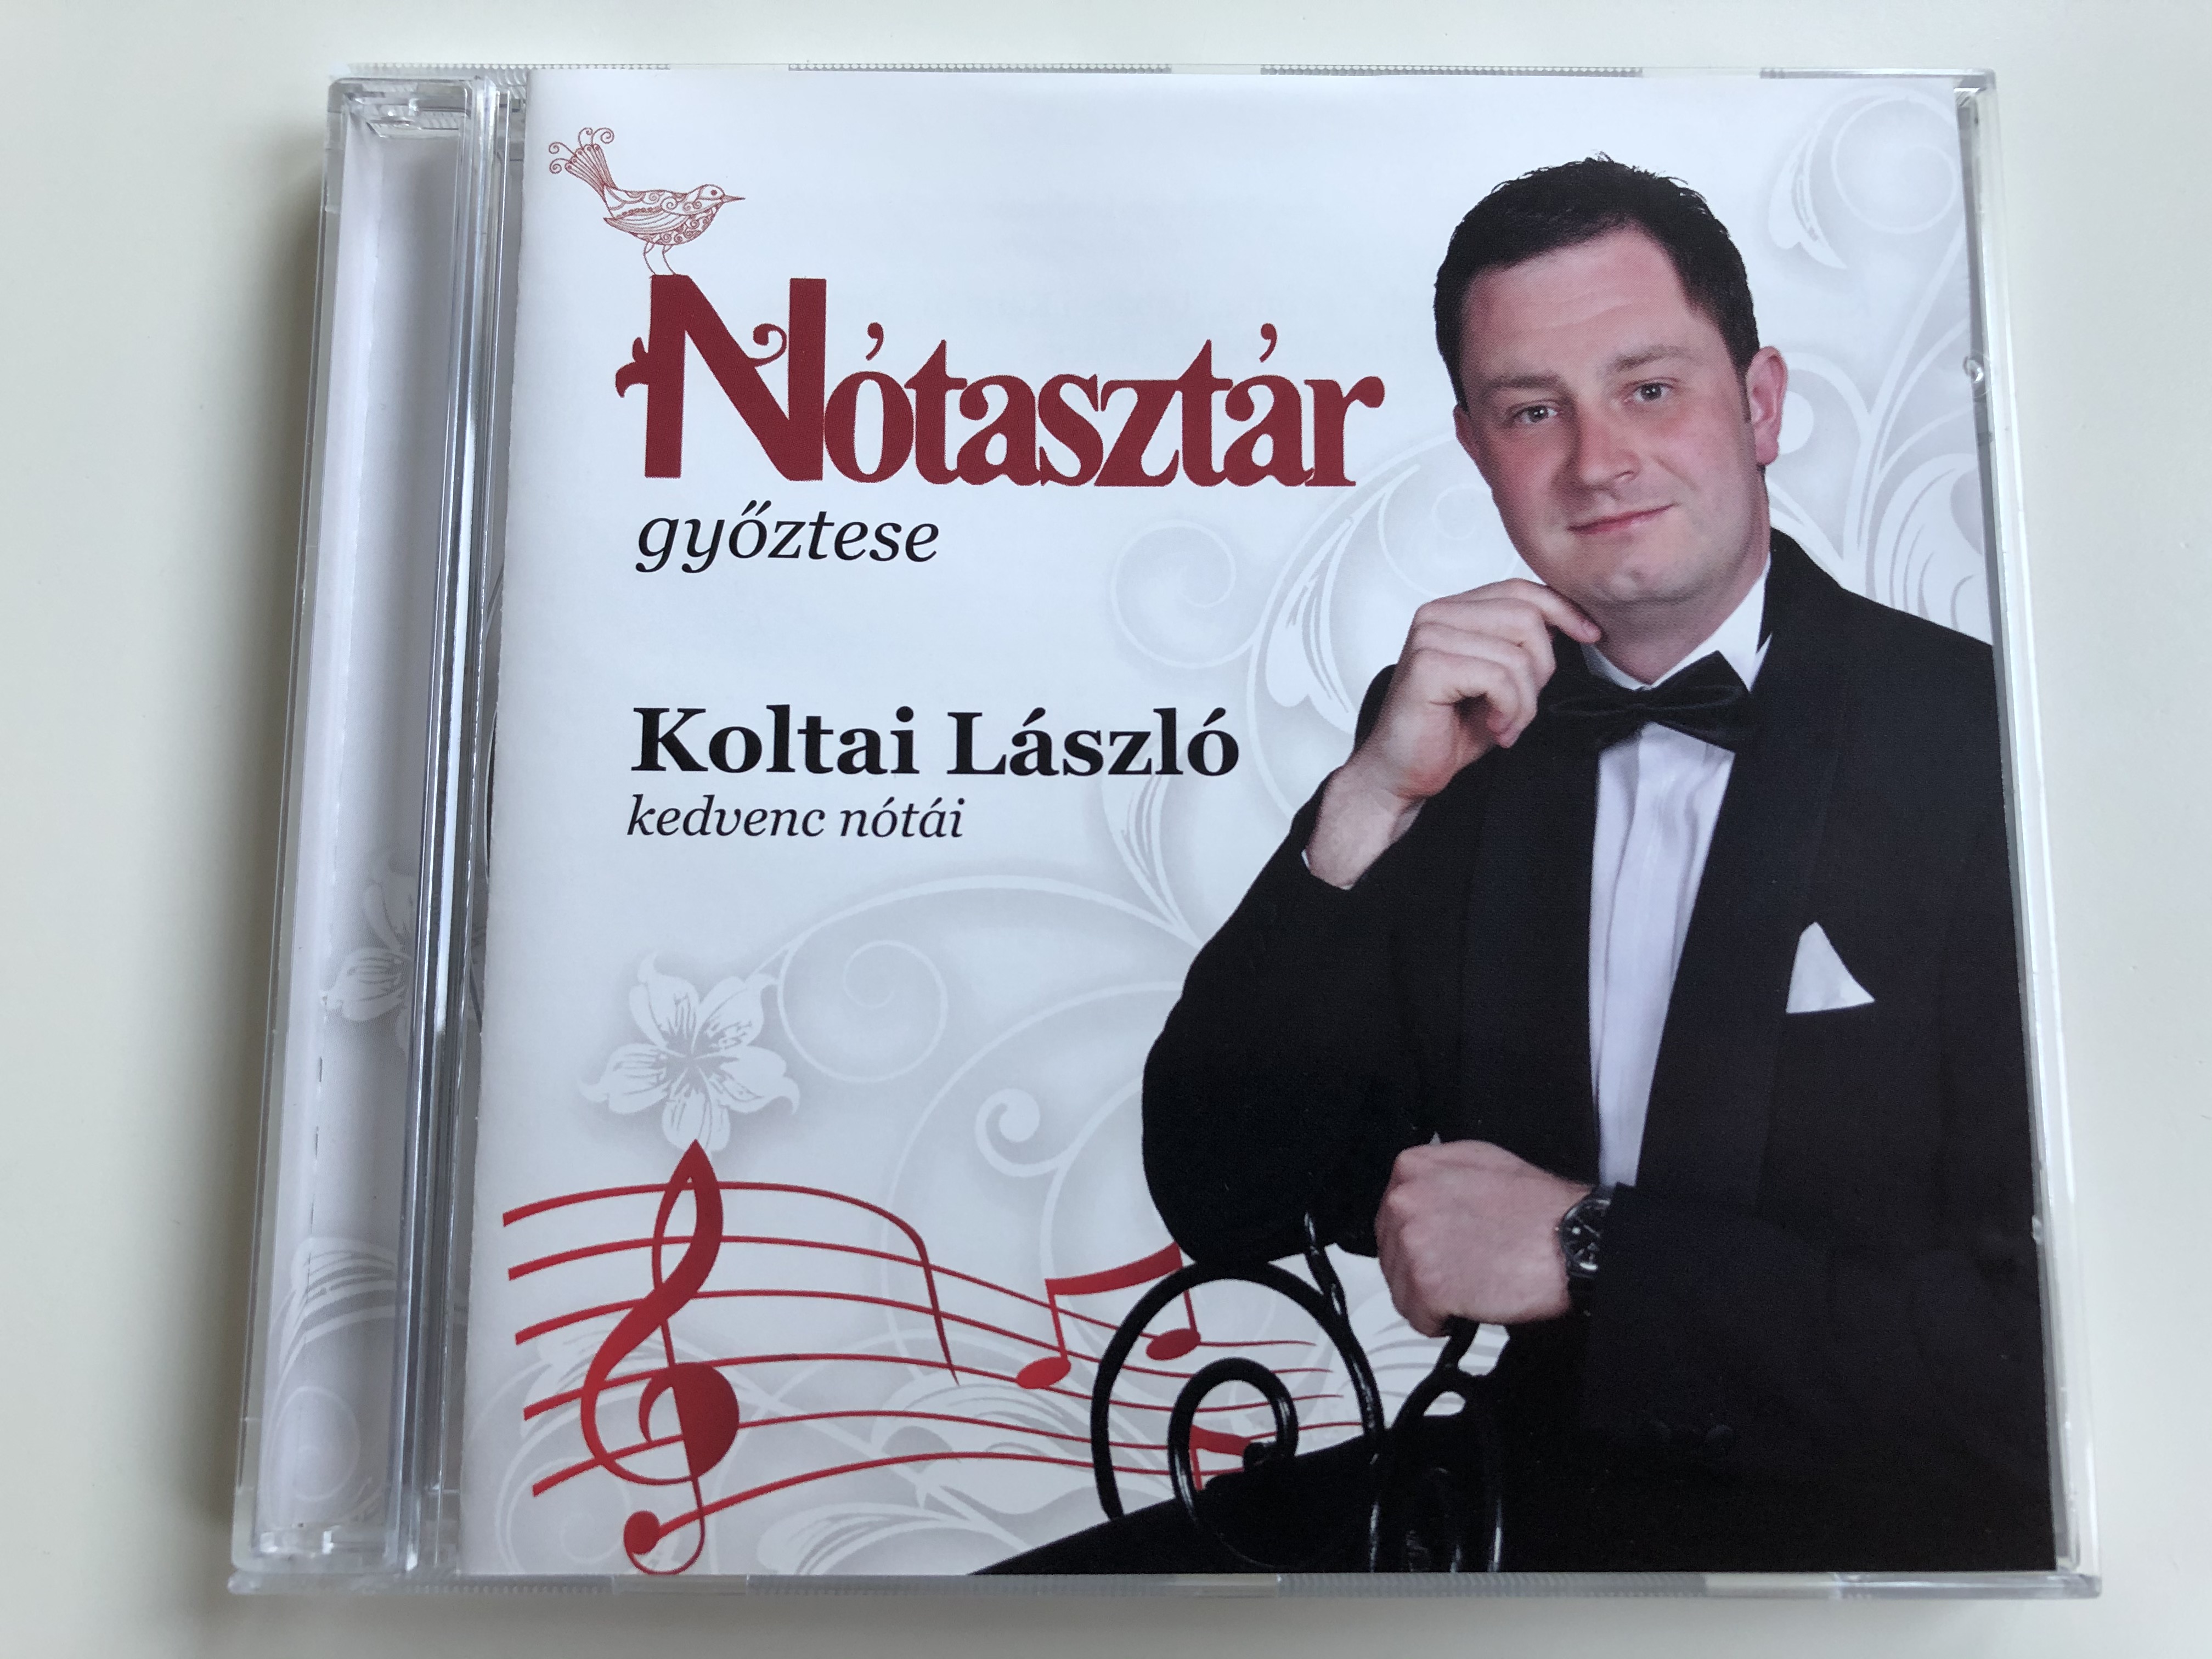 notasztar-gyoztese-koltai-laszlo-kedvenc-notai-magneoton-audio-cd-2012-5999884690764-1-.jpg